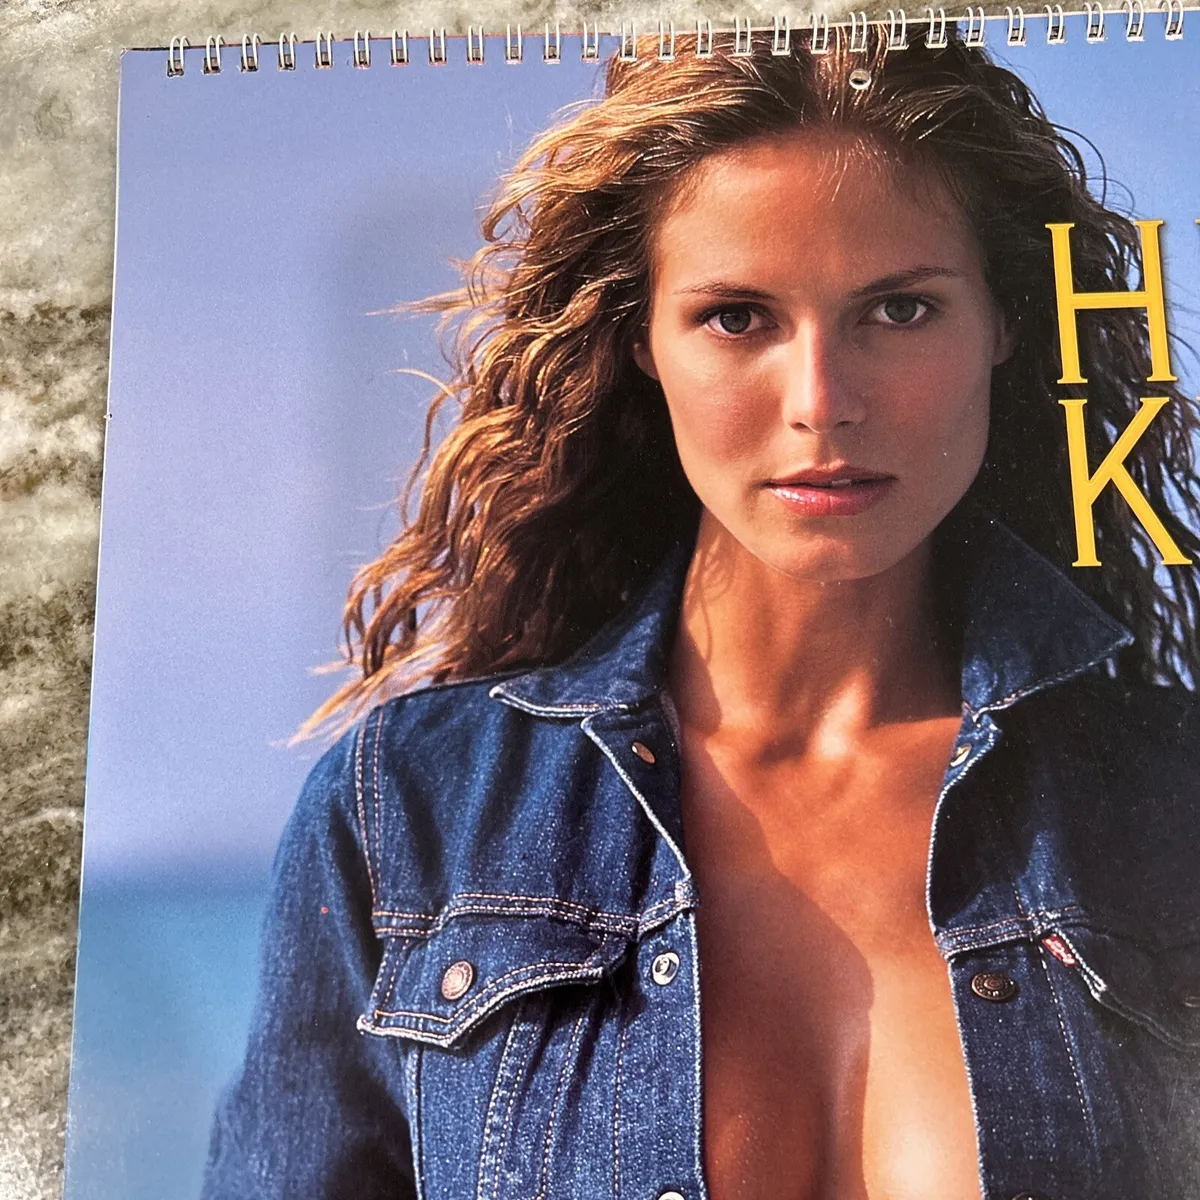 clarky clark recommends Heidi Klum Love Calendar